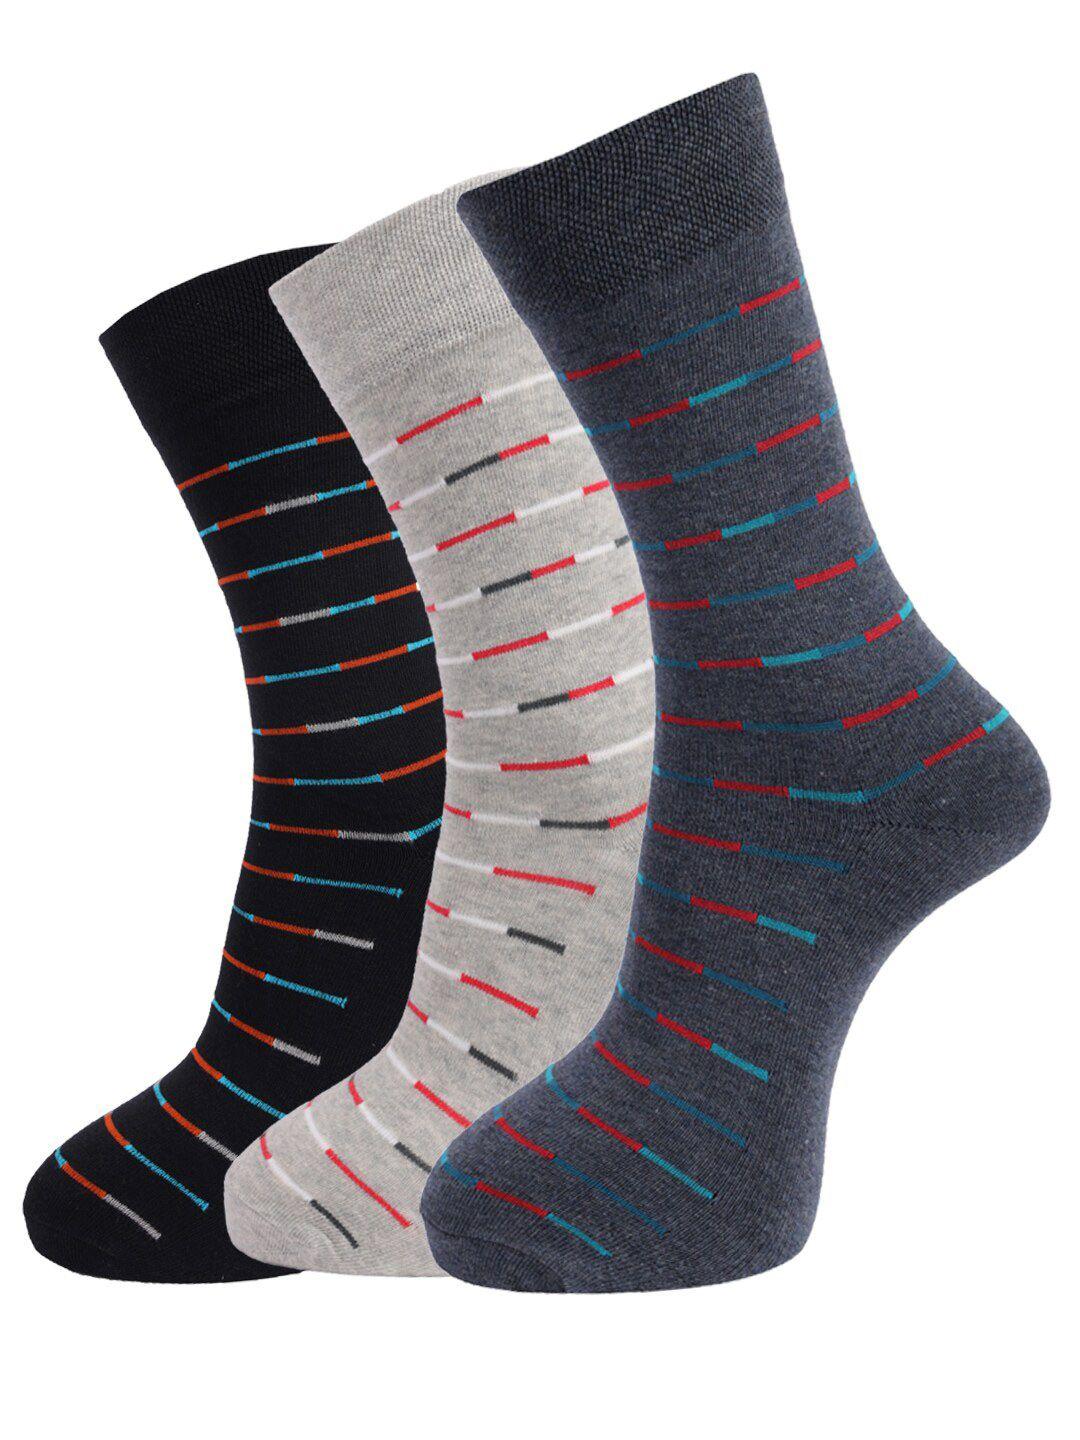 dollar socks men set of 3 assorted & printed pure cotton above ankle socks